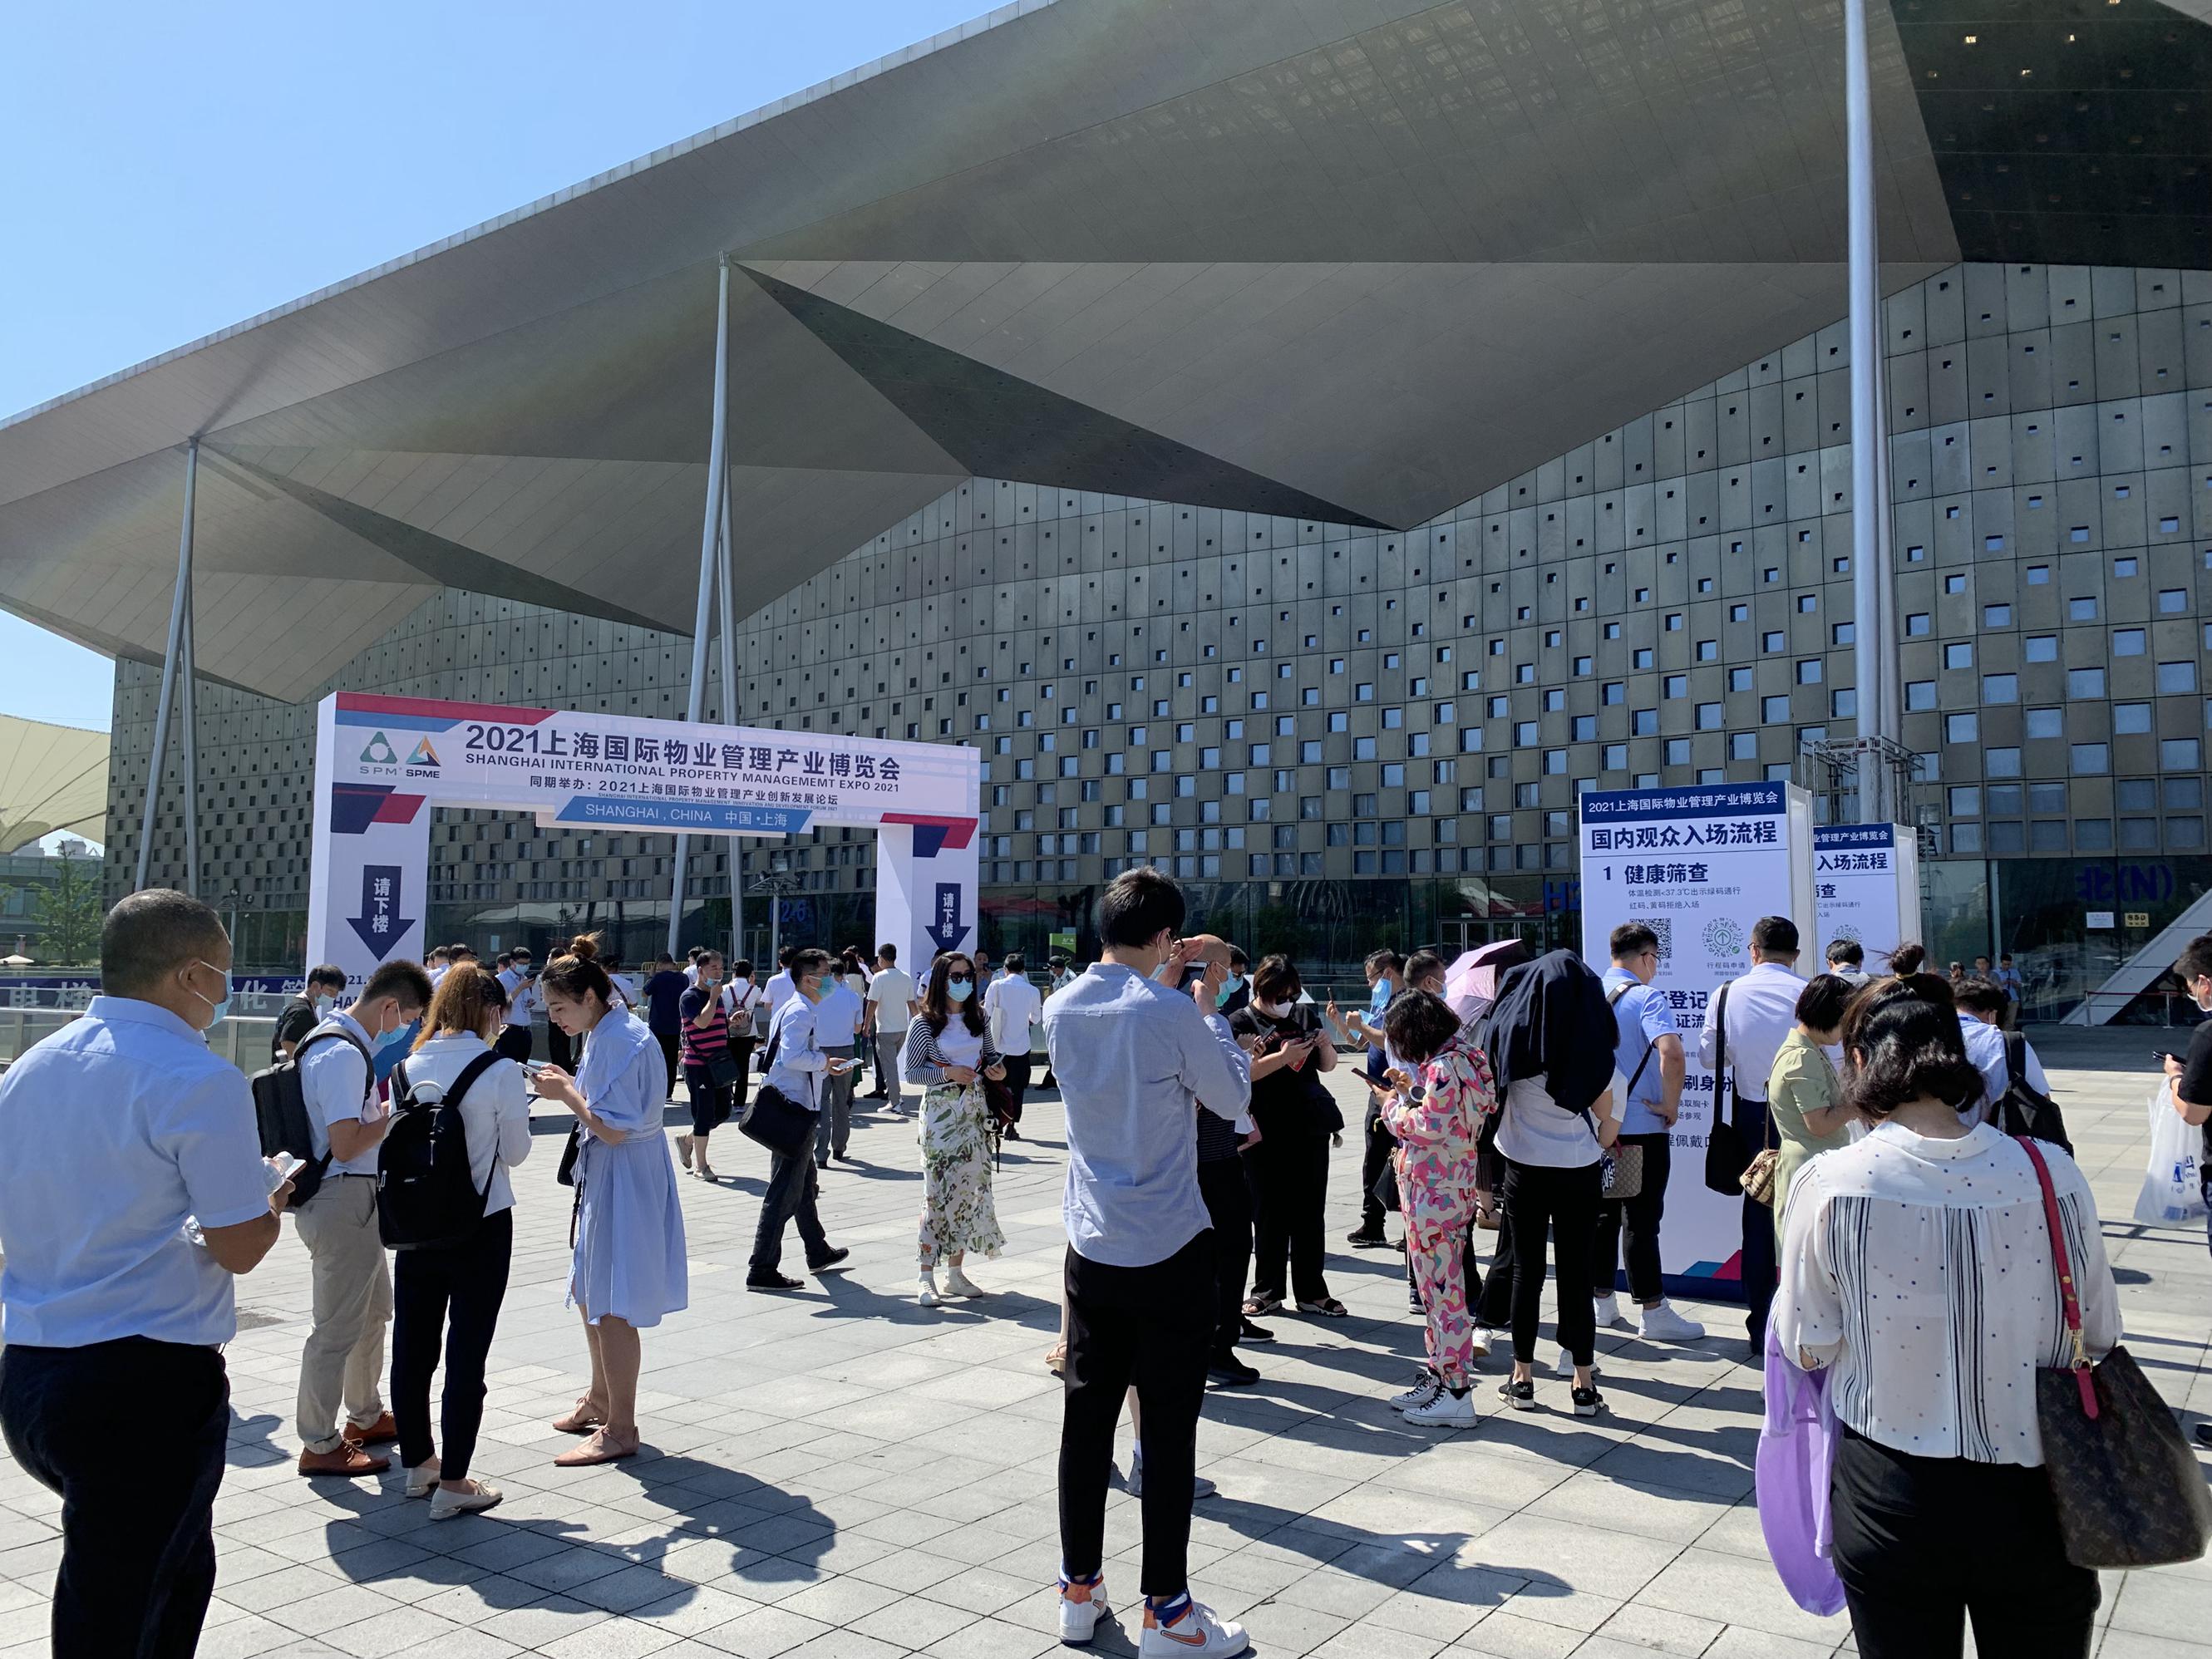 3354cc金沙集团亮相上海国际物业管理产业博览会 